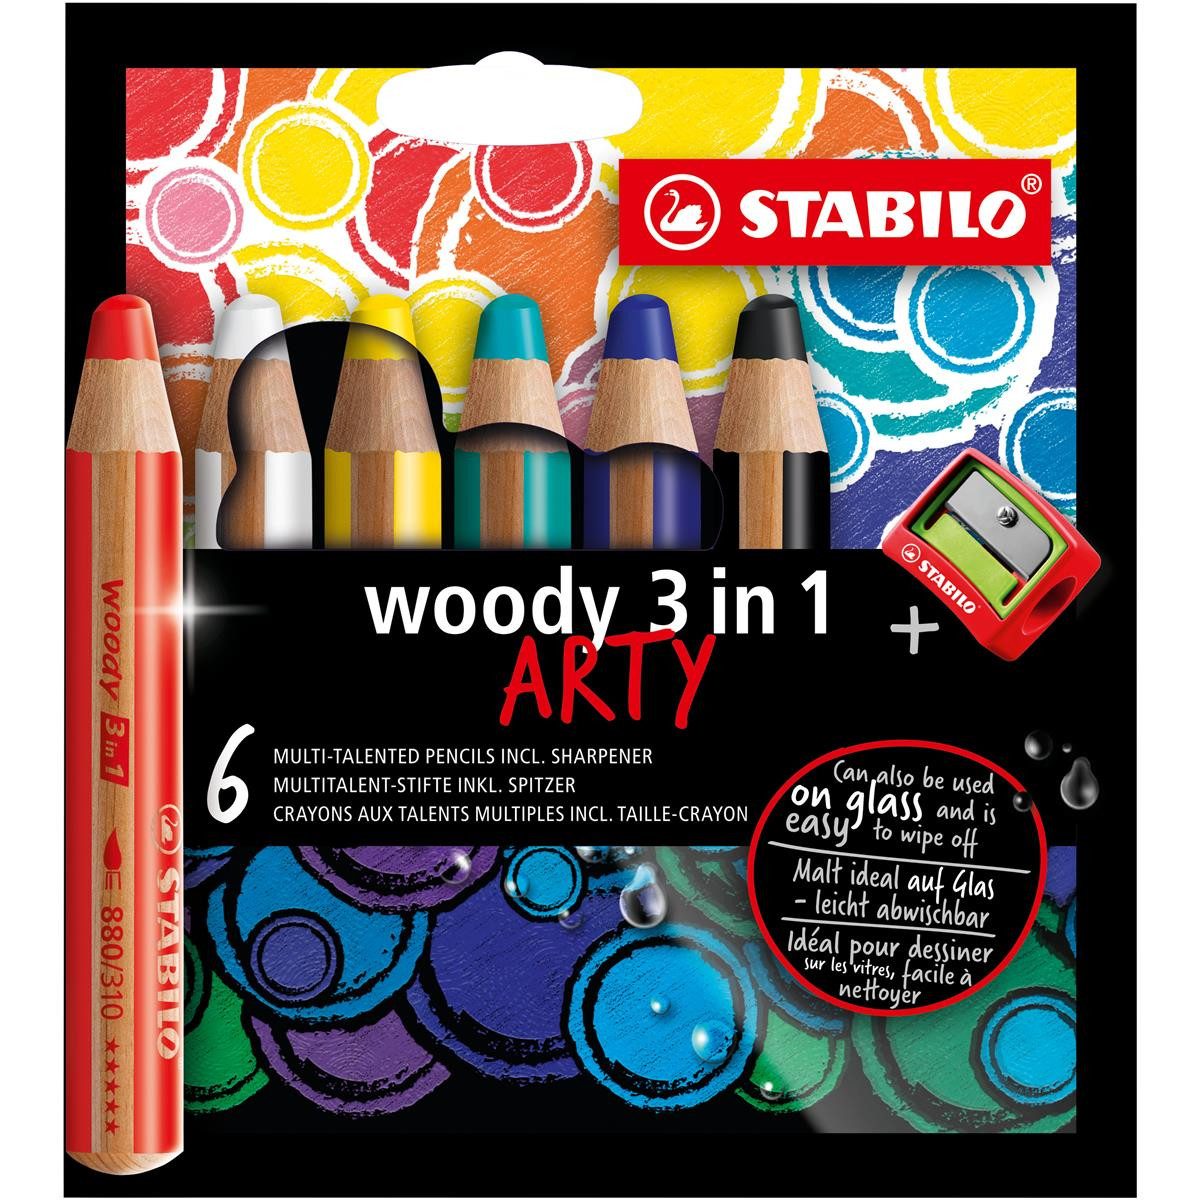 STABILO Buntstift STABILO woody 3 in 1 ARTY Buntstift - 6er Set mit Spitzer - 10 mm